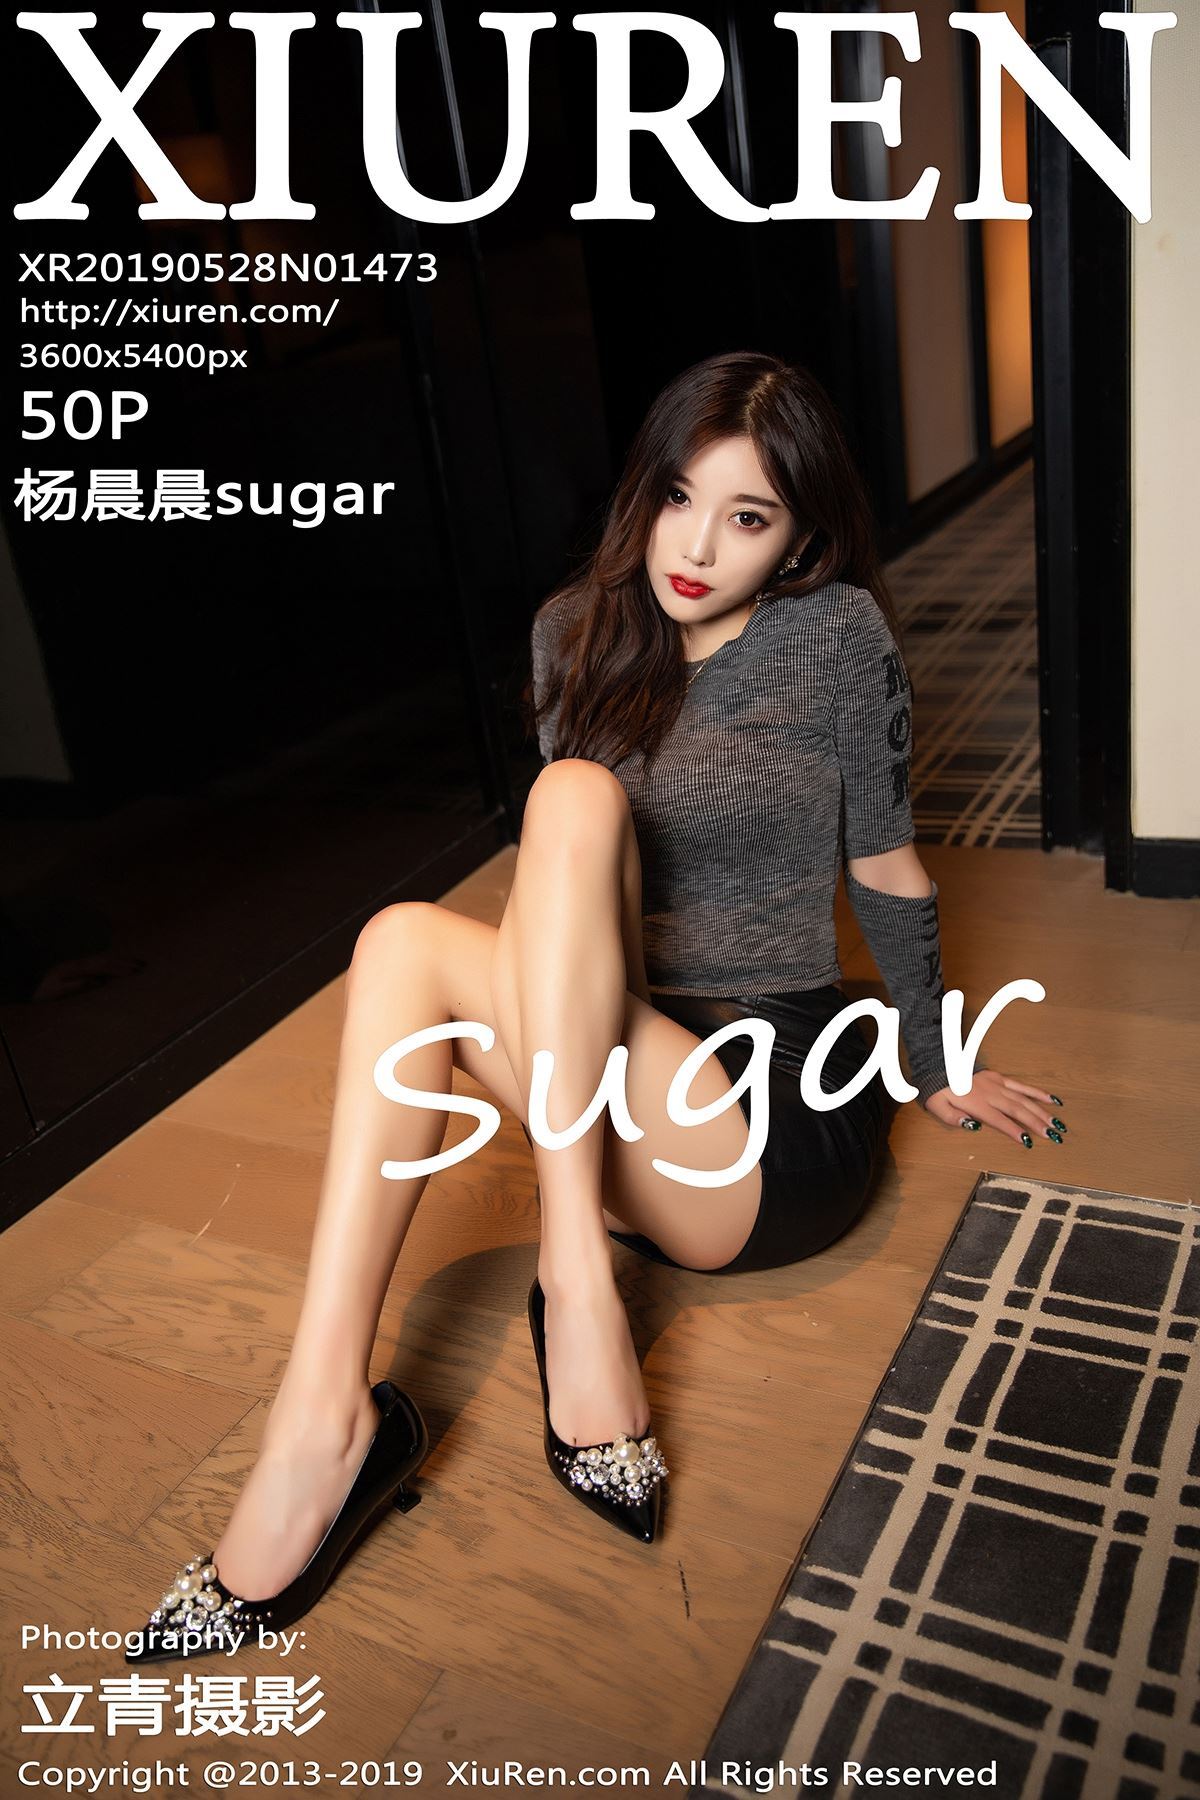 [xiuren.com] May 28, 2019 no.1473 Yang Chenchen sugar